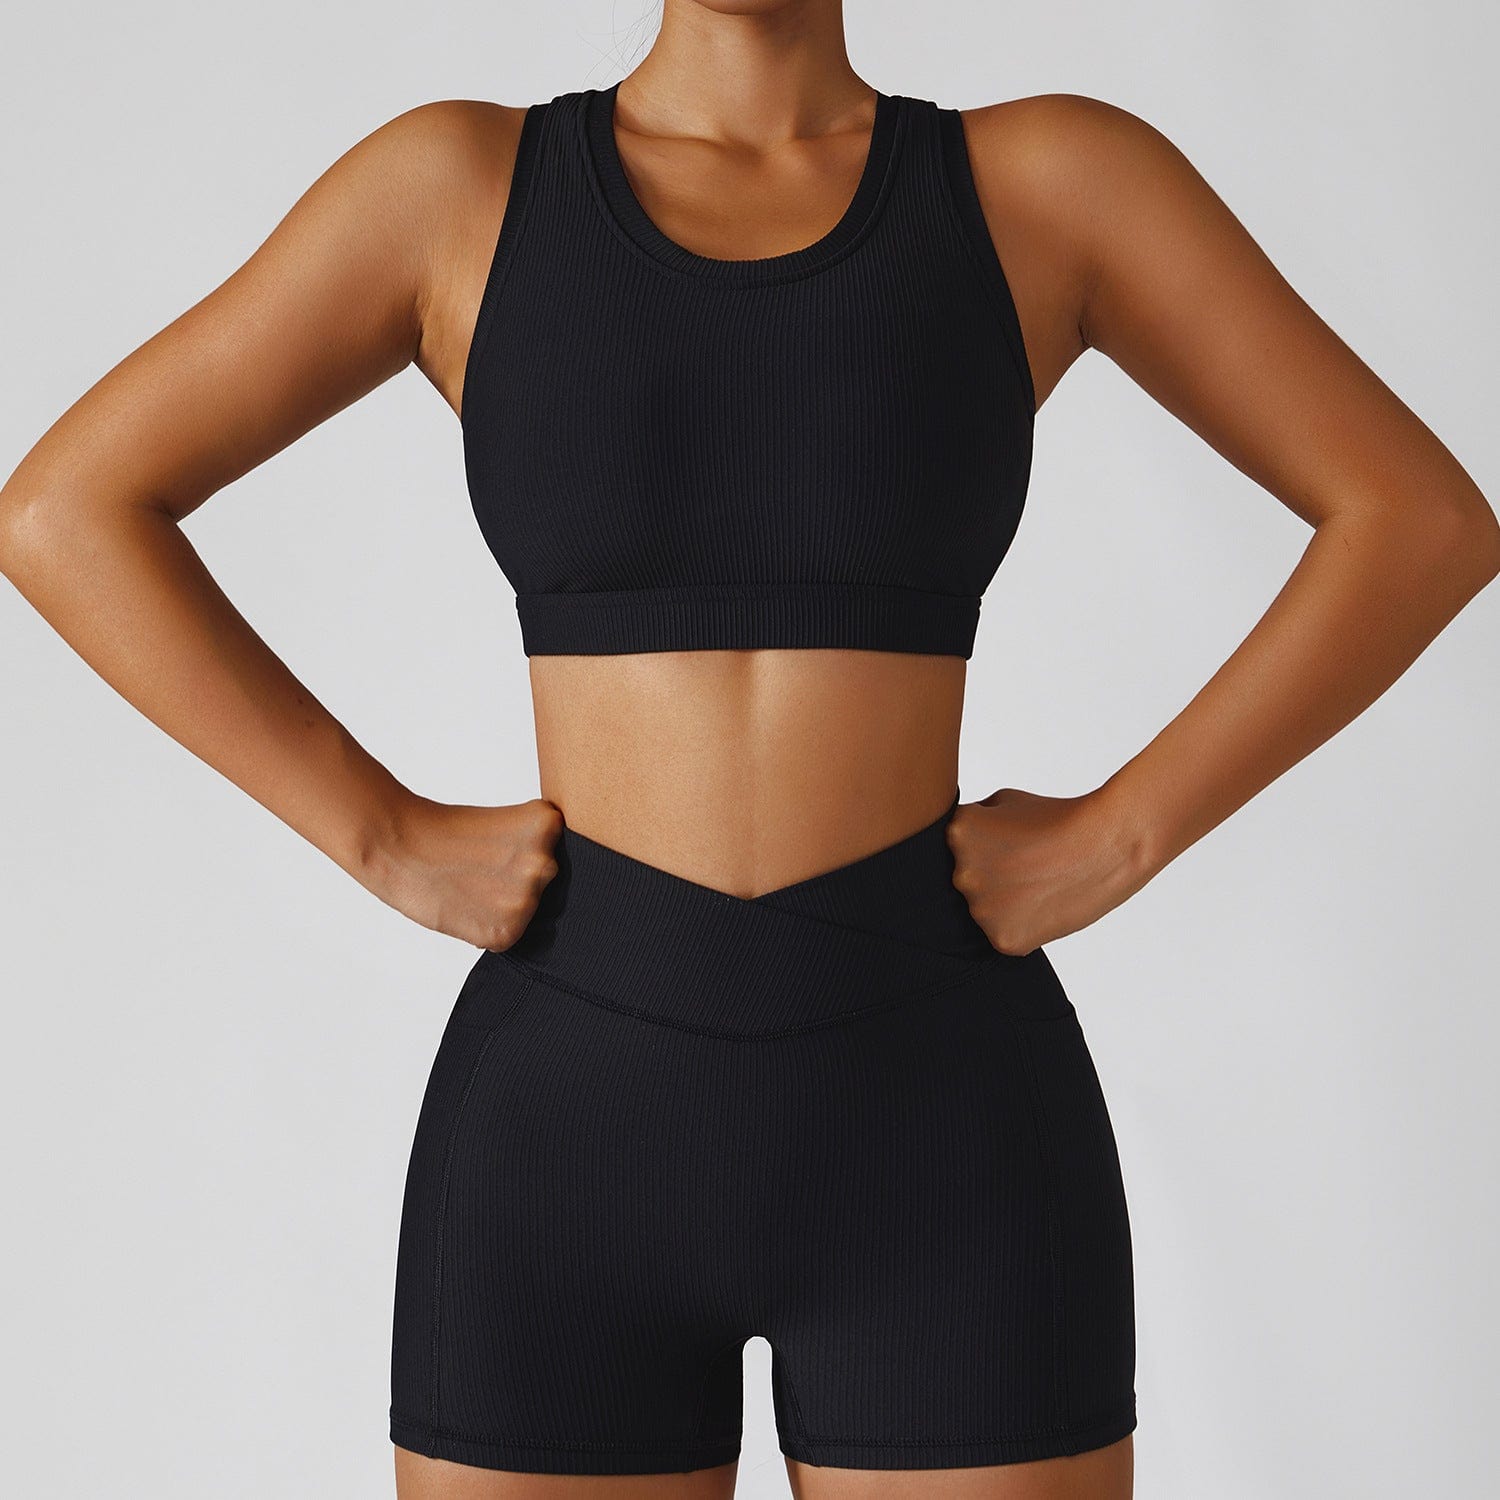 InnateFit FITNESS Premium Black / Tank shorts / S Women's Running Fitness Suit Yoga Clothes CJTZ156149301AZ